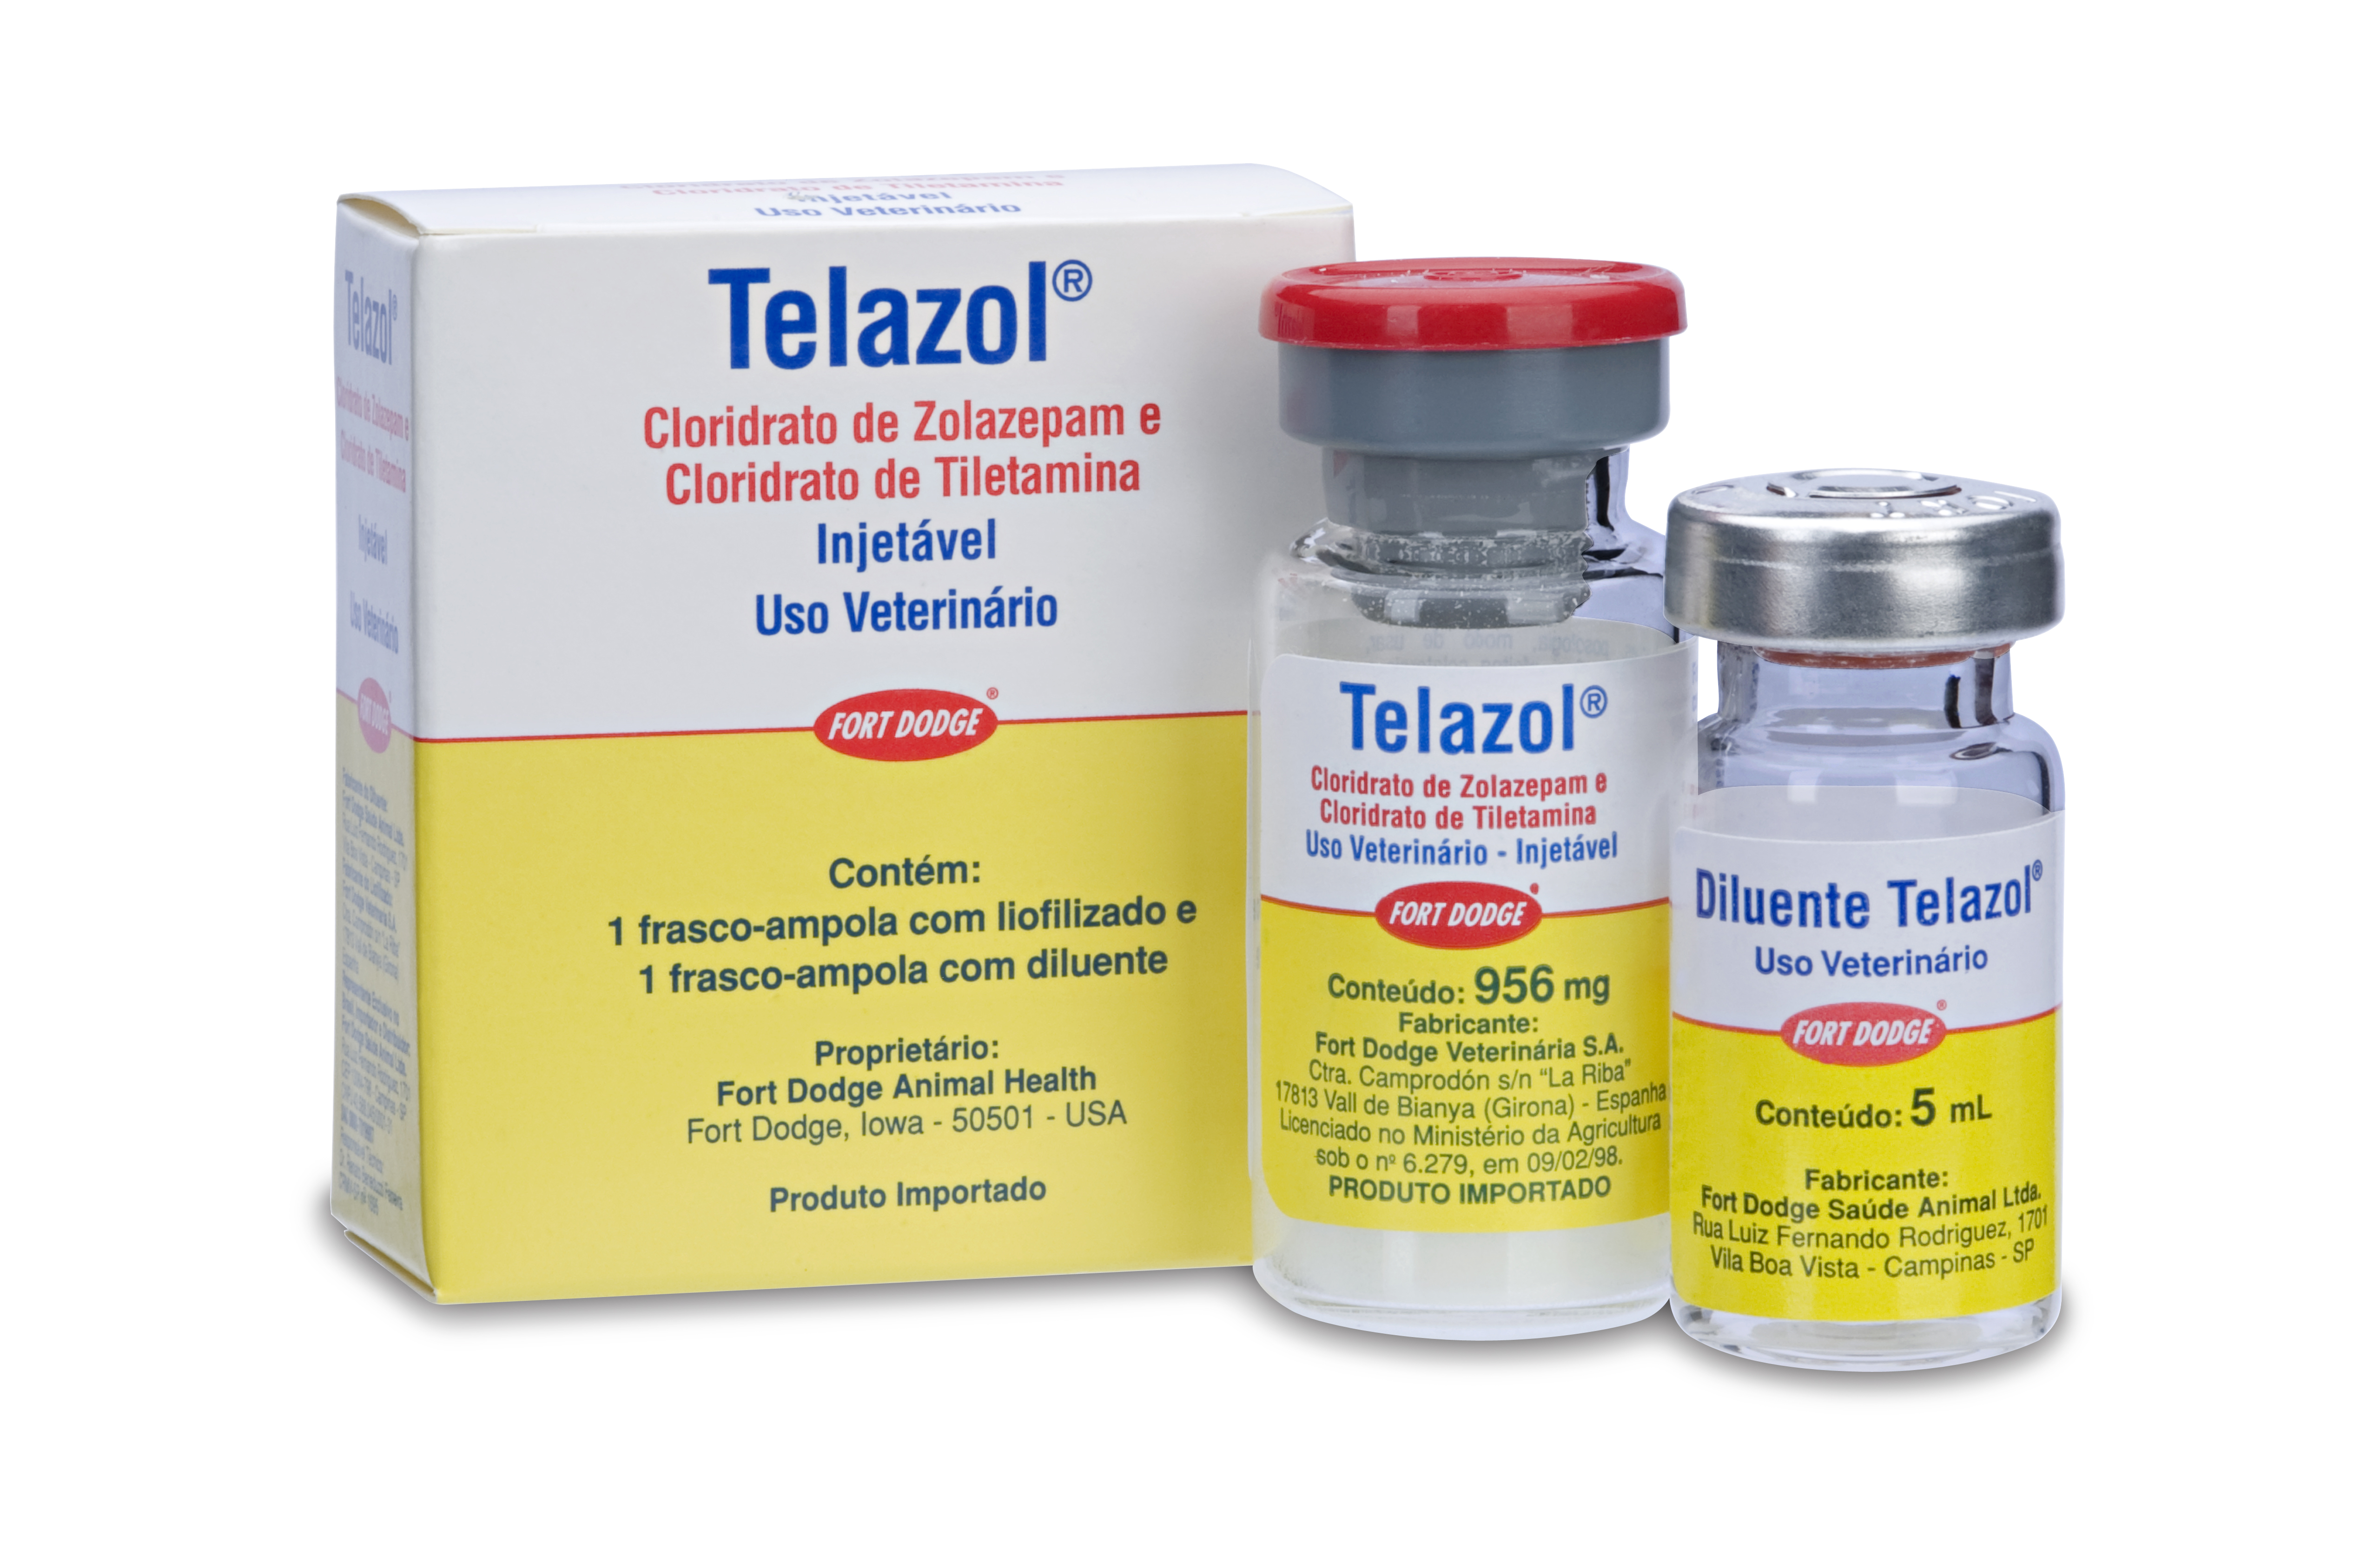 Telazol Product